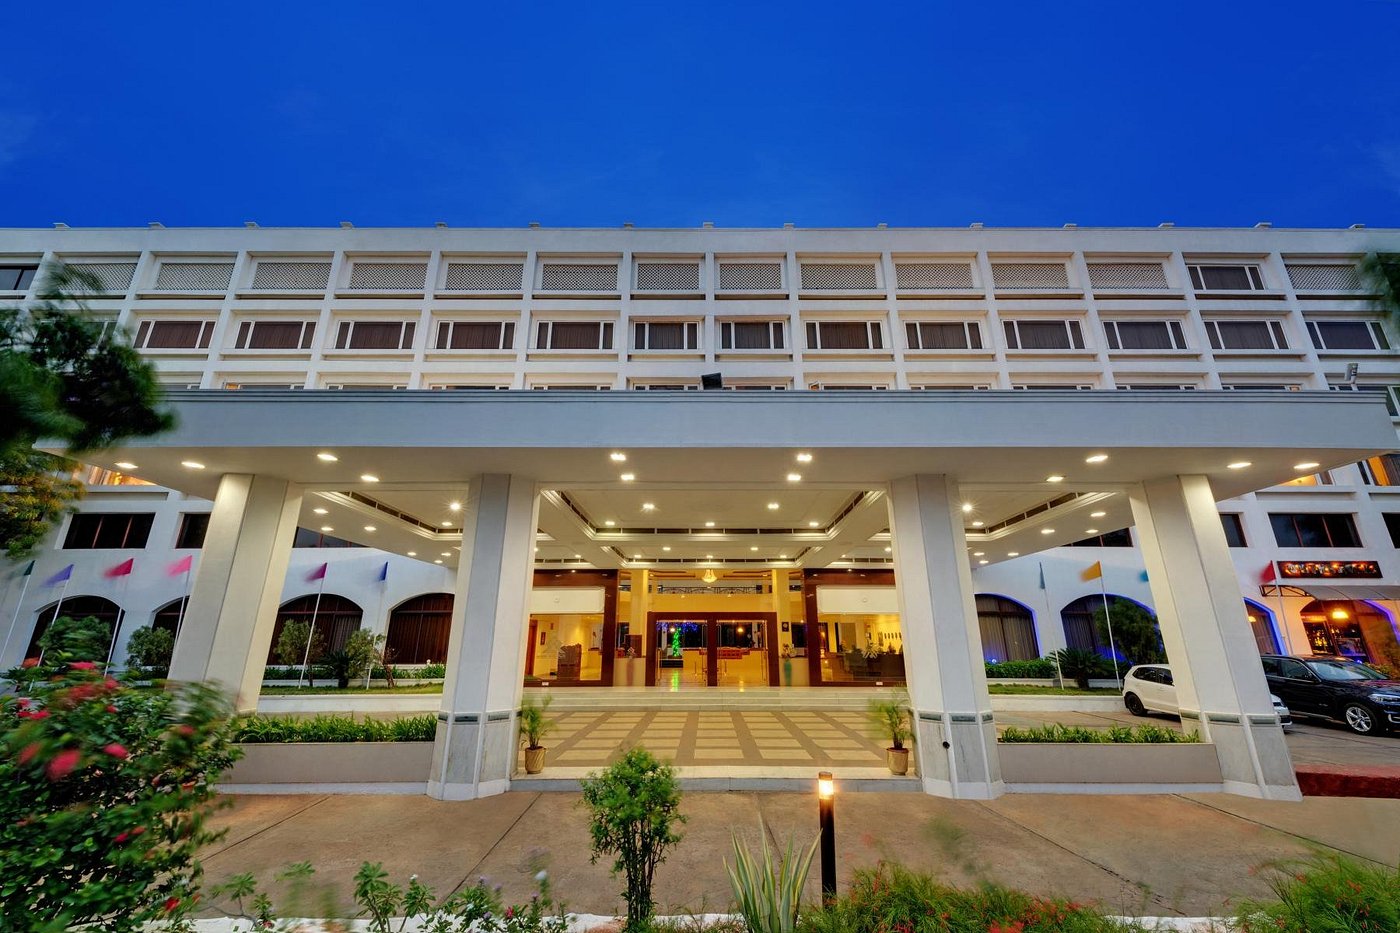 tamilnadu tourism hotels trichy